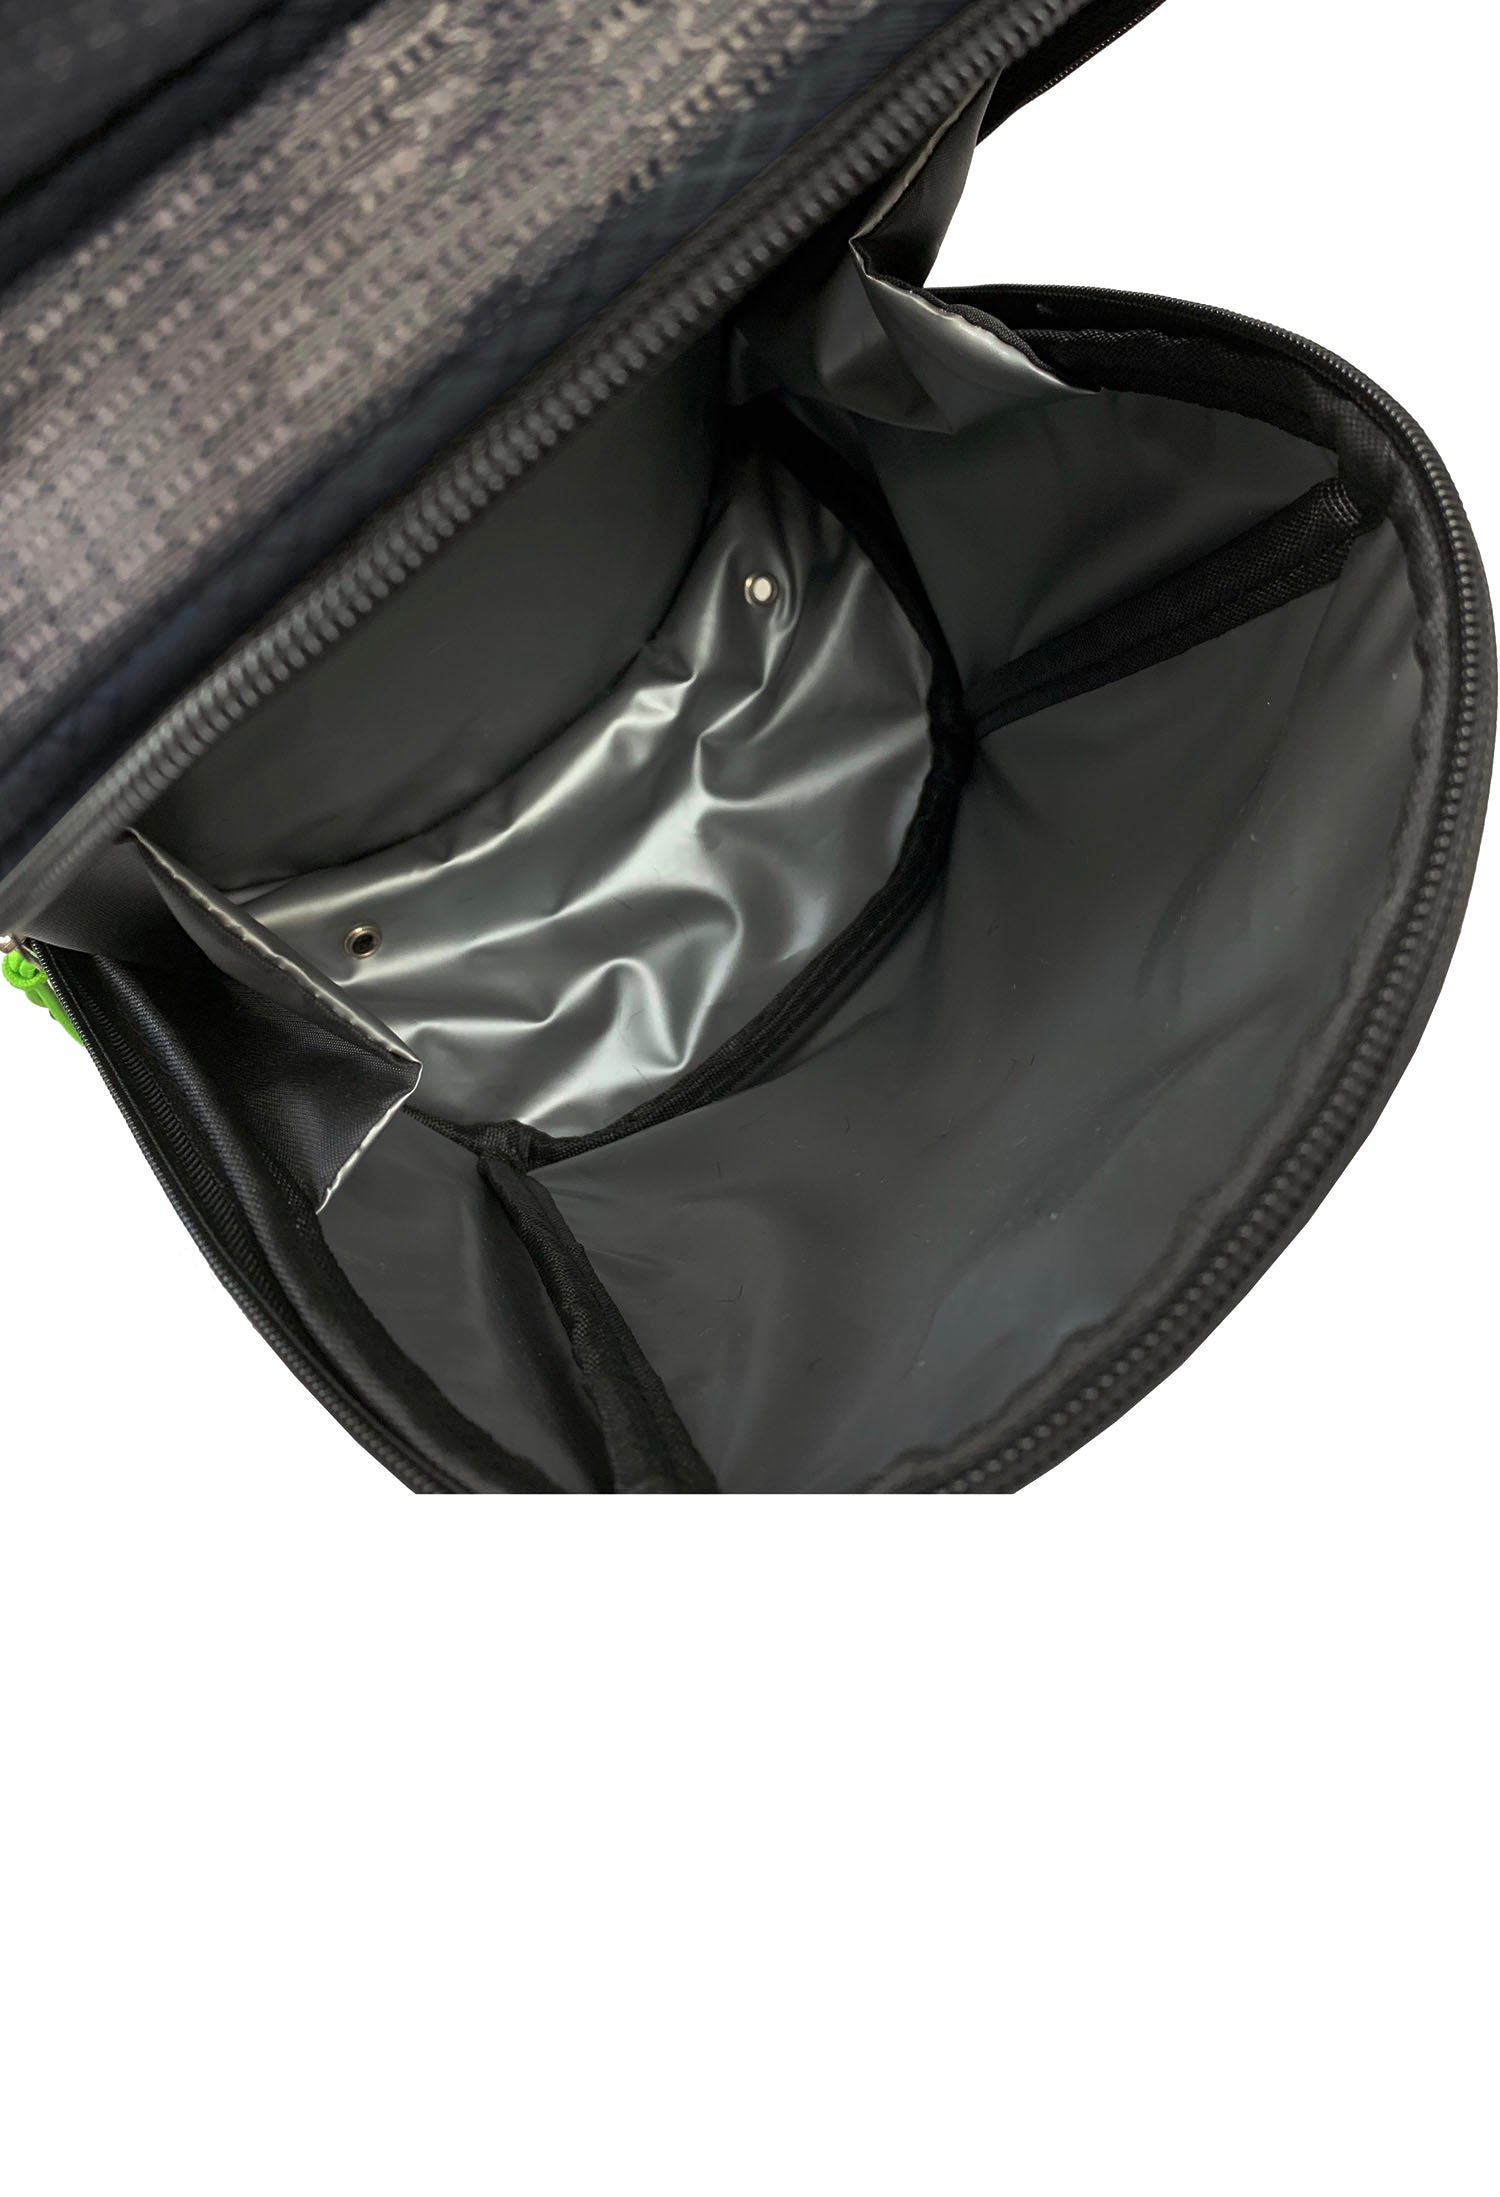 Axglo Golf Cart Bag - Green/Grey with cooler bag